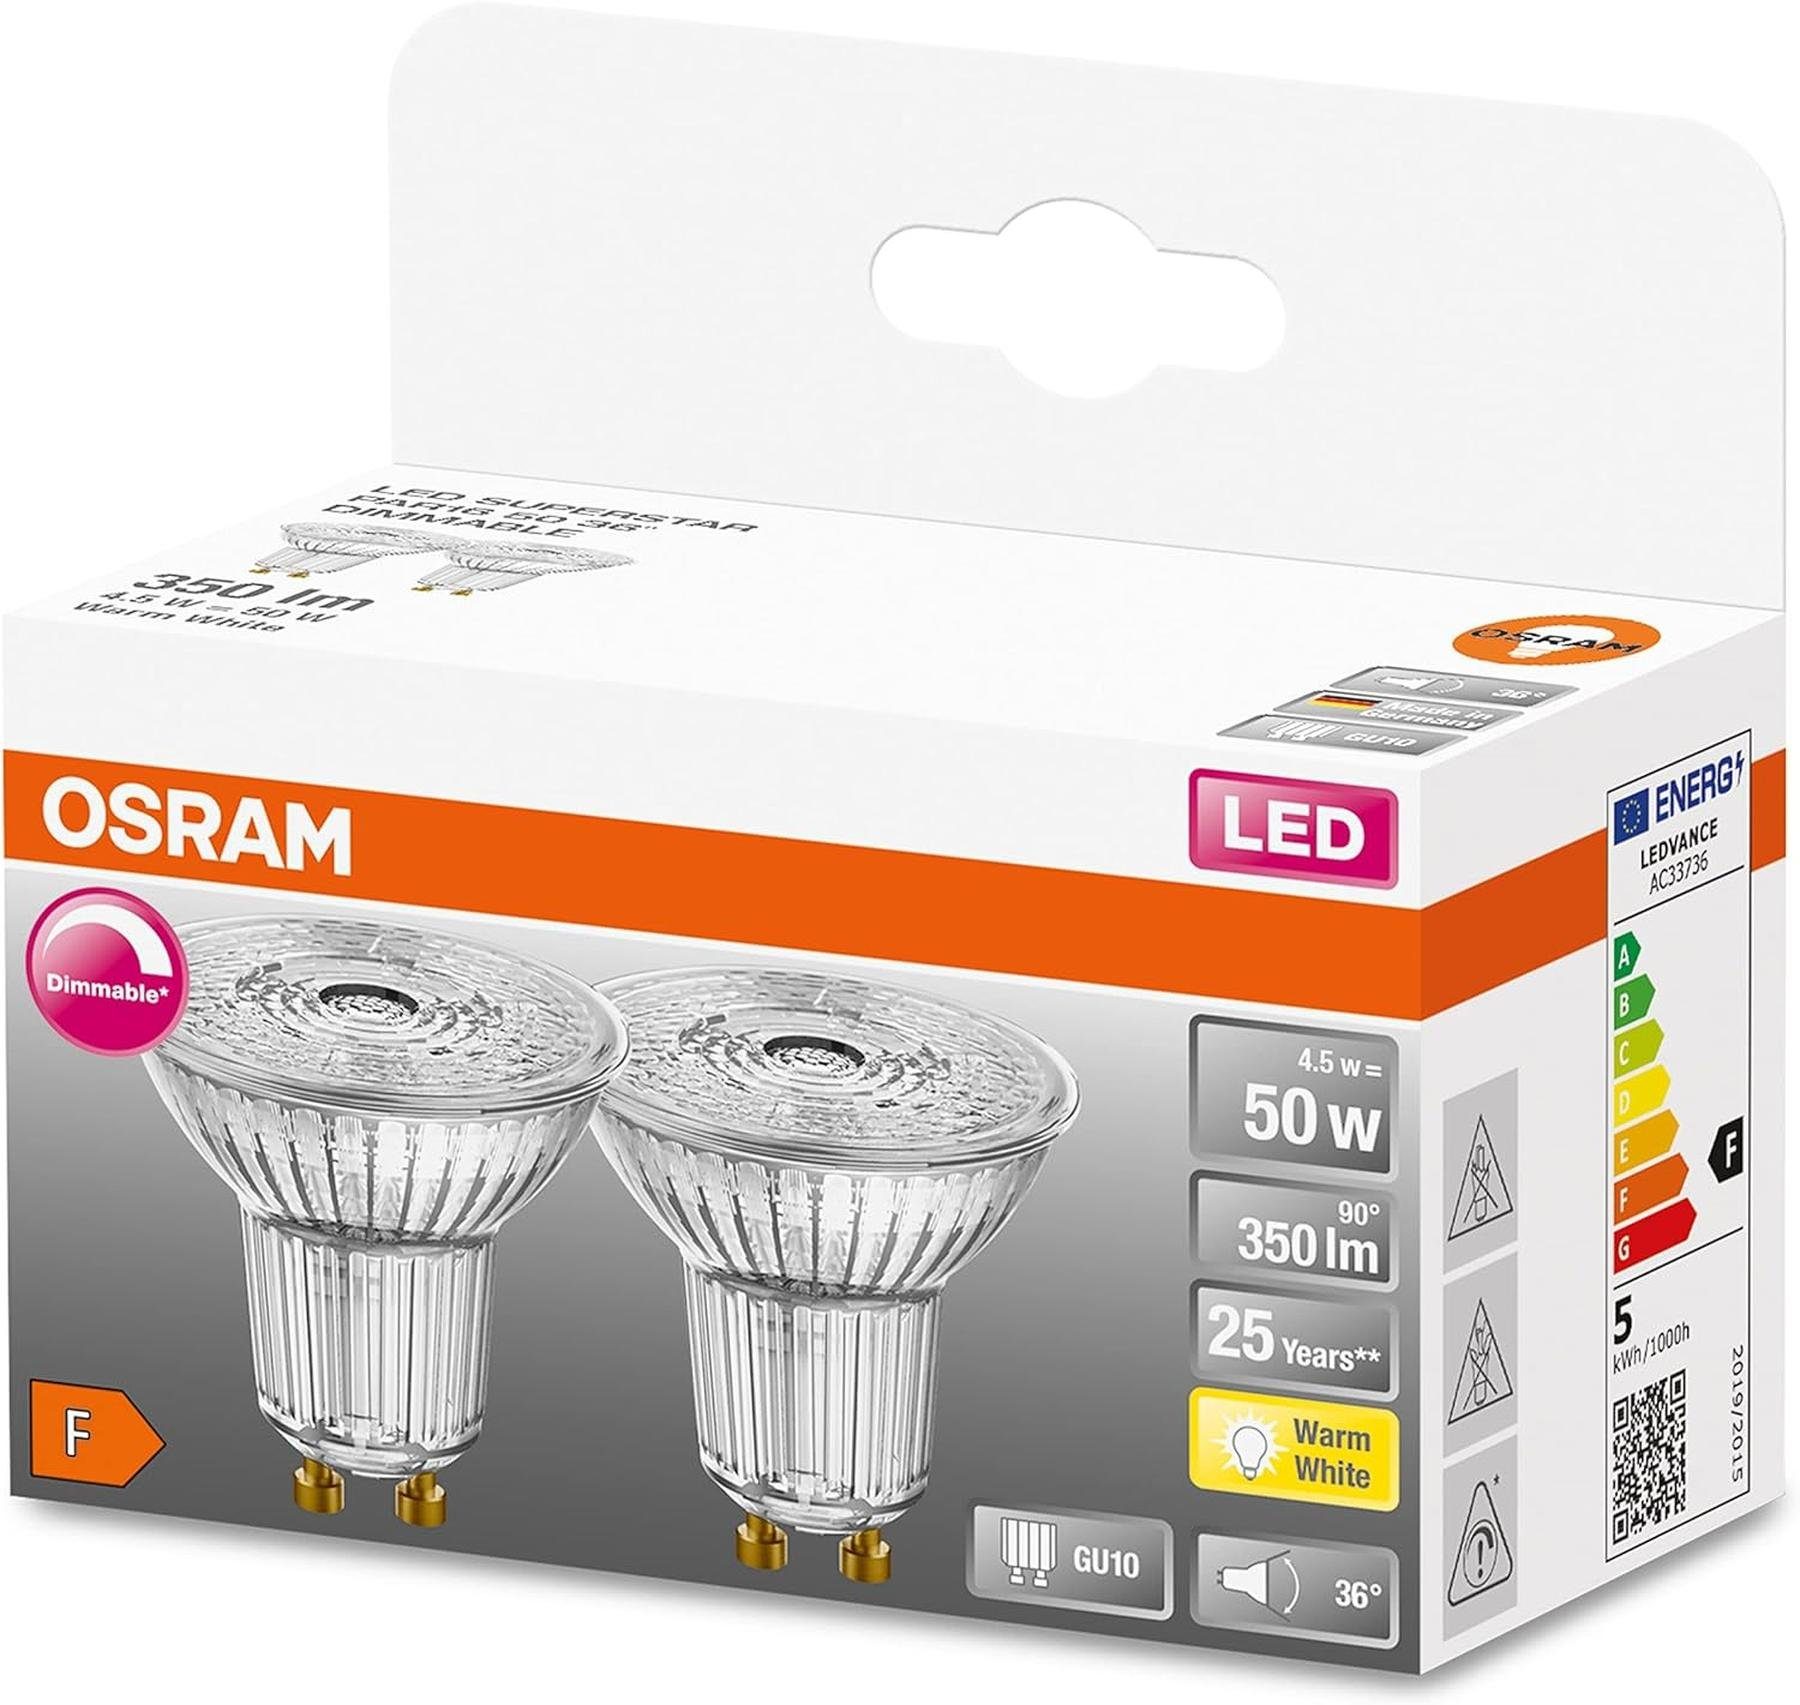 Warmweiss, GU10, Leuchtmittel LED-Leuchtmittel Lampe 50W OSRAM-Dimmbare-PAR16-LED-Reflektorlampe-mit-GU10, Osram Doppel-Pack 2700K